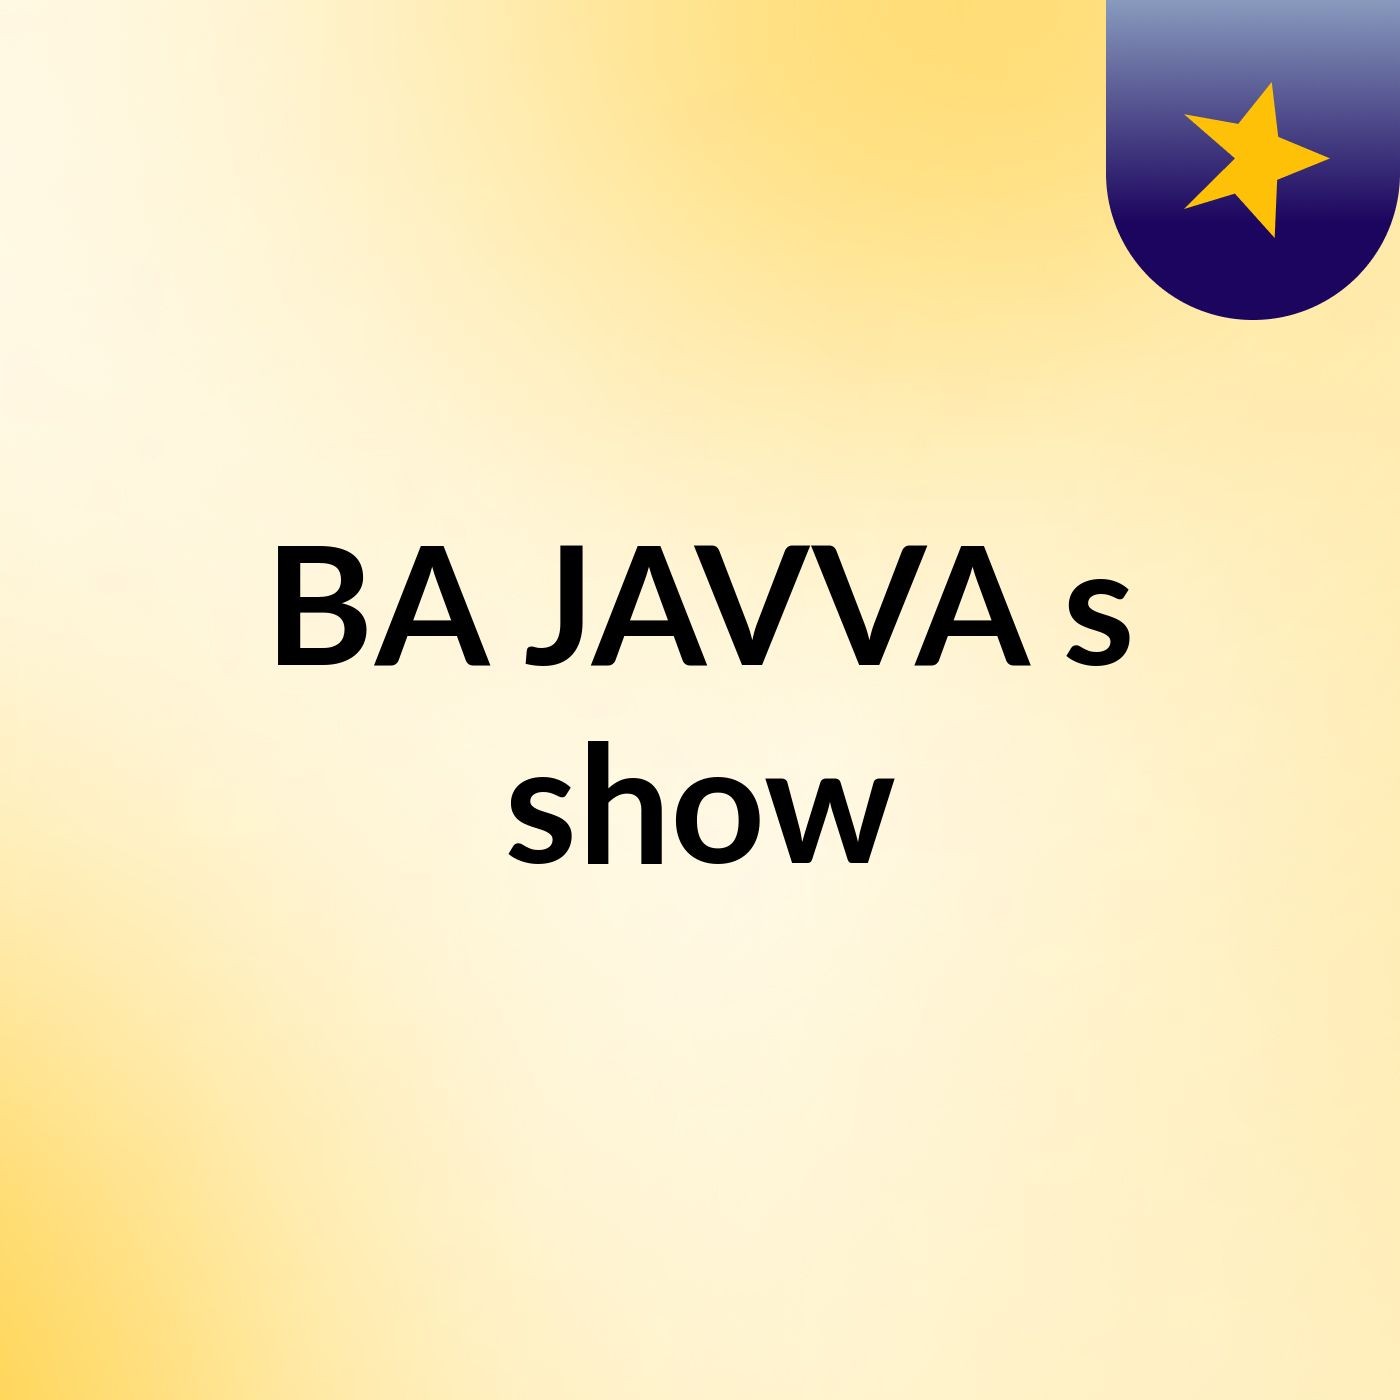 BA JAVVA's show